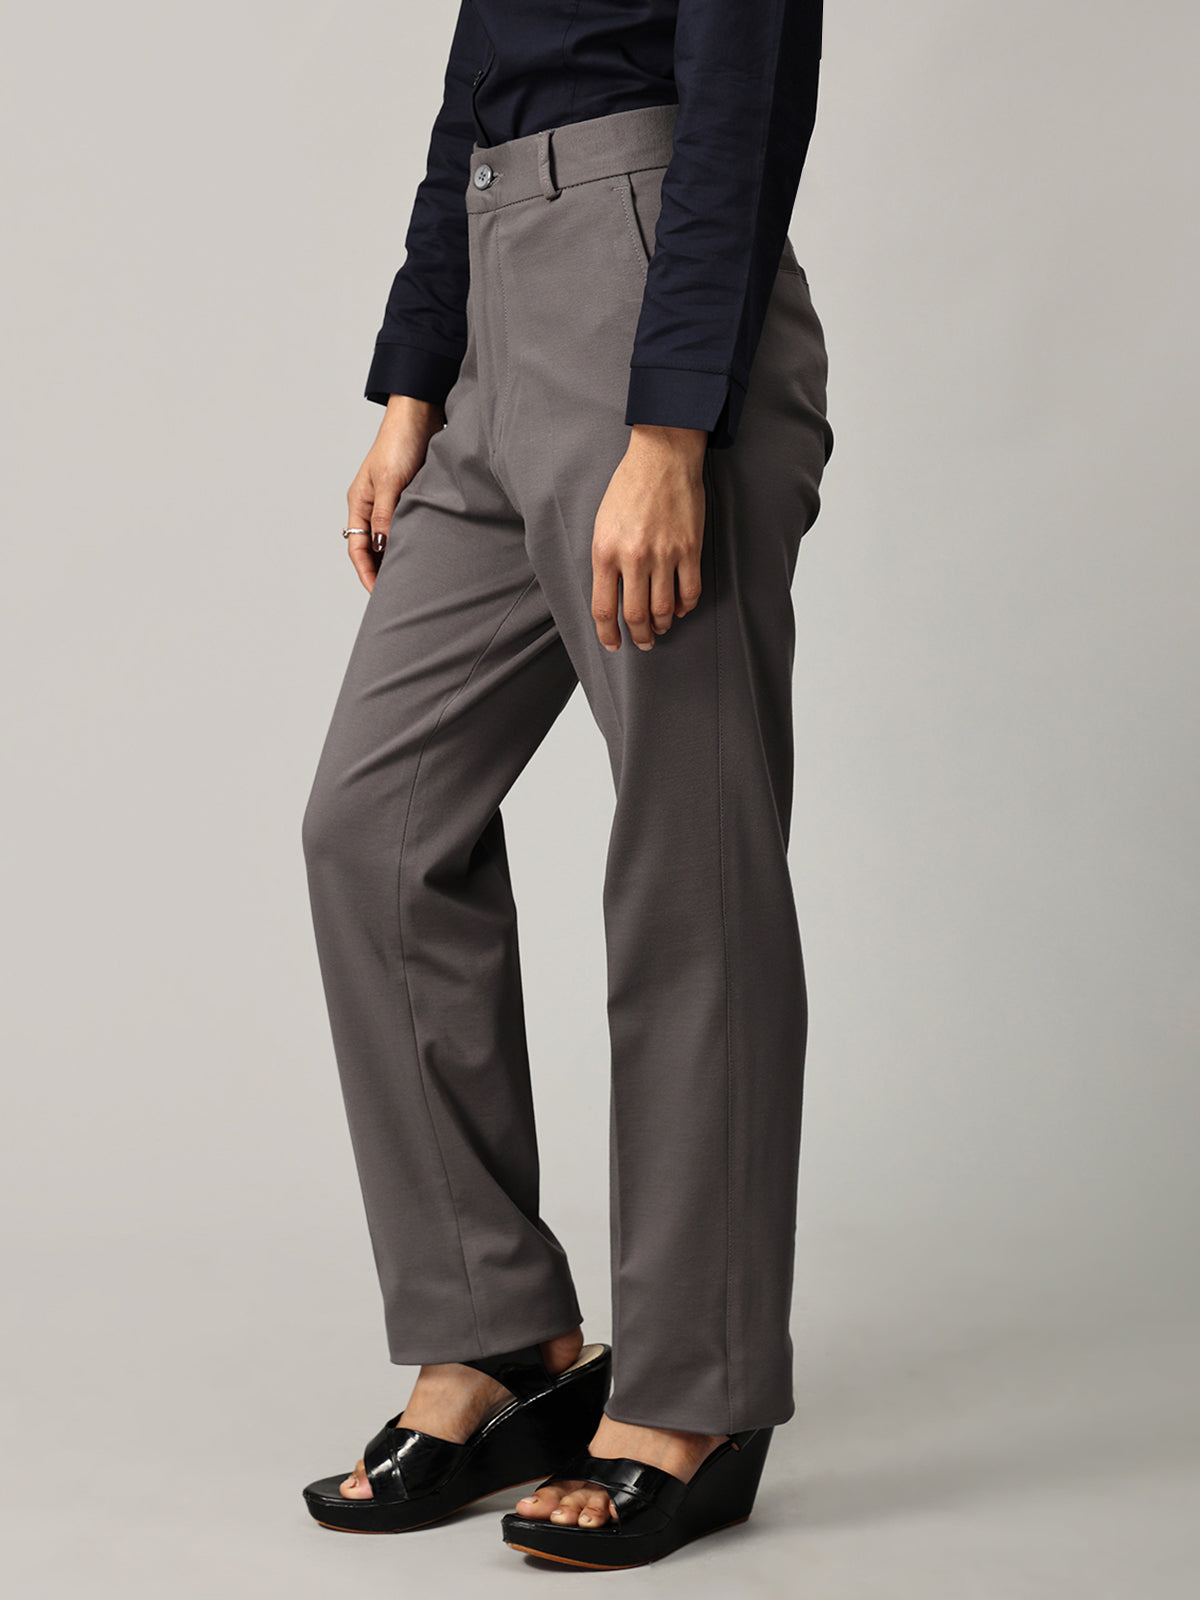 Formal Trouser: Check Men Grey Cotton Formal Trouser on Cliths